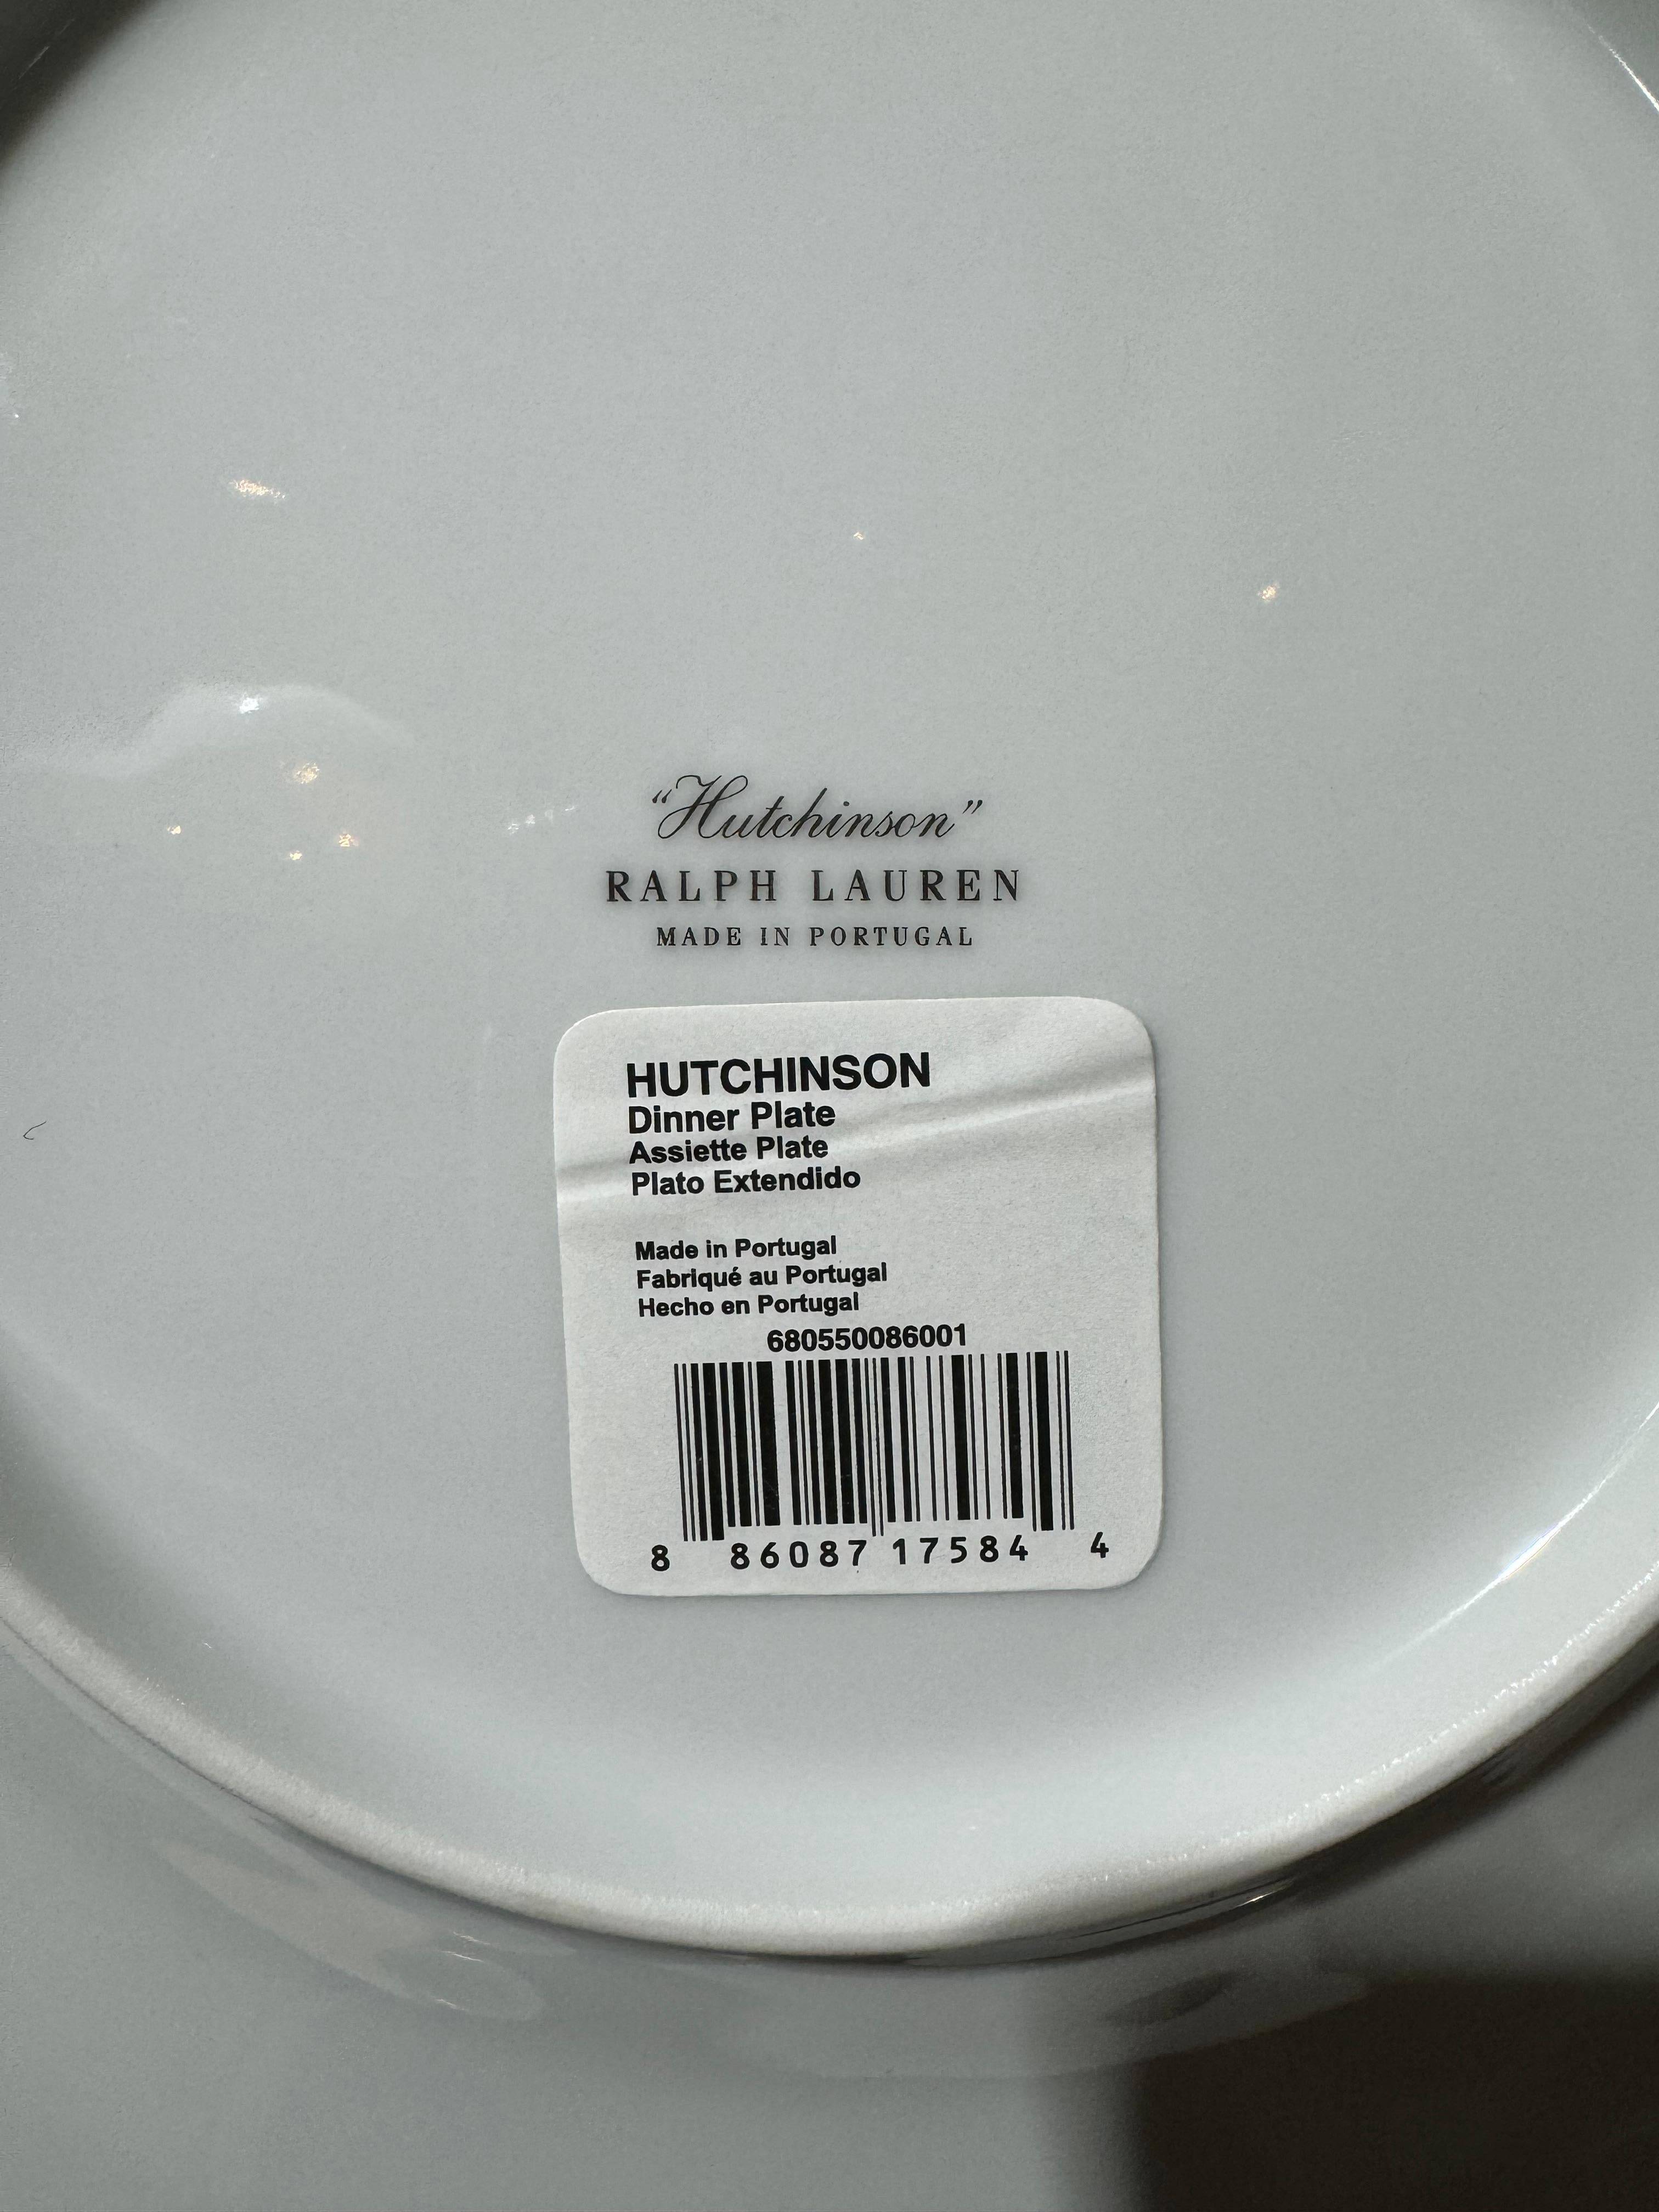 Ralph Lauren Hutchinson Porcelain Dinnerware~ set of 6 place settings For Sale 1